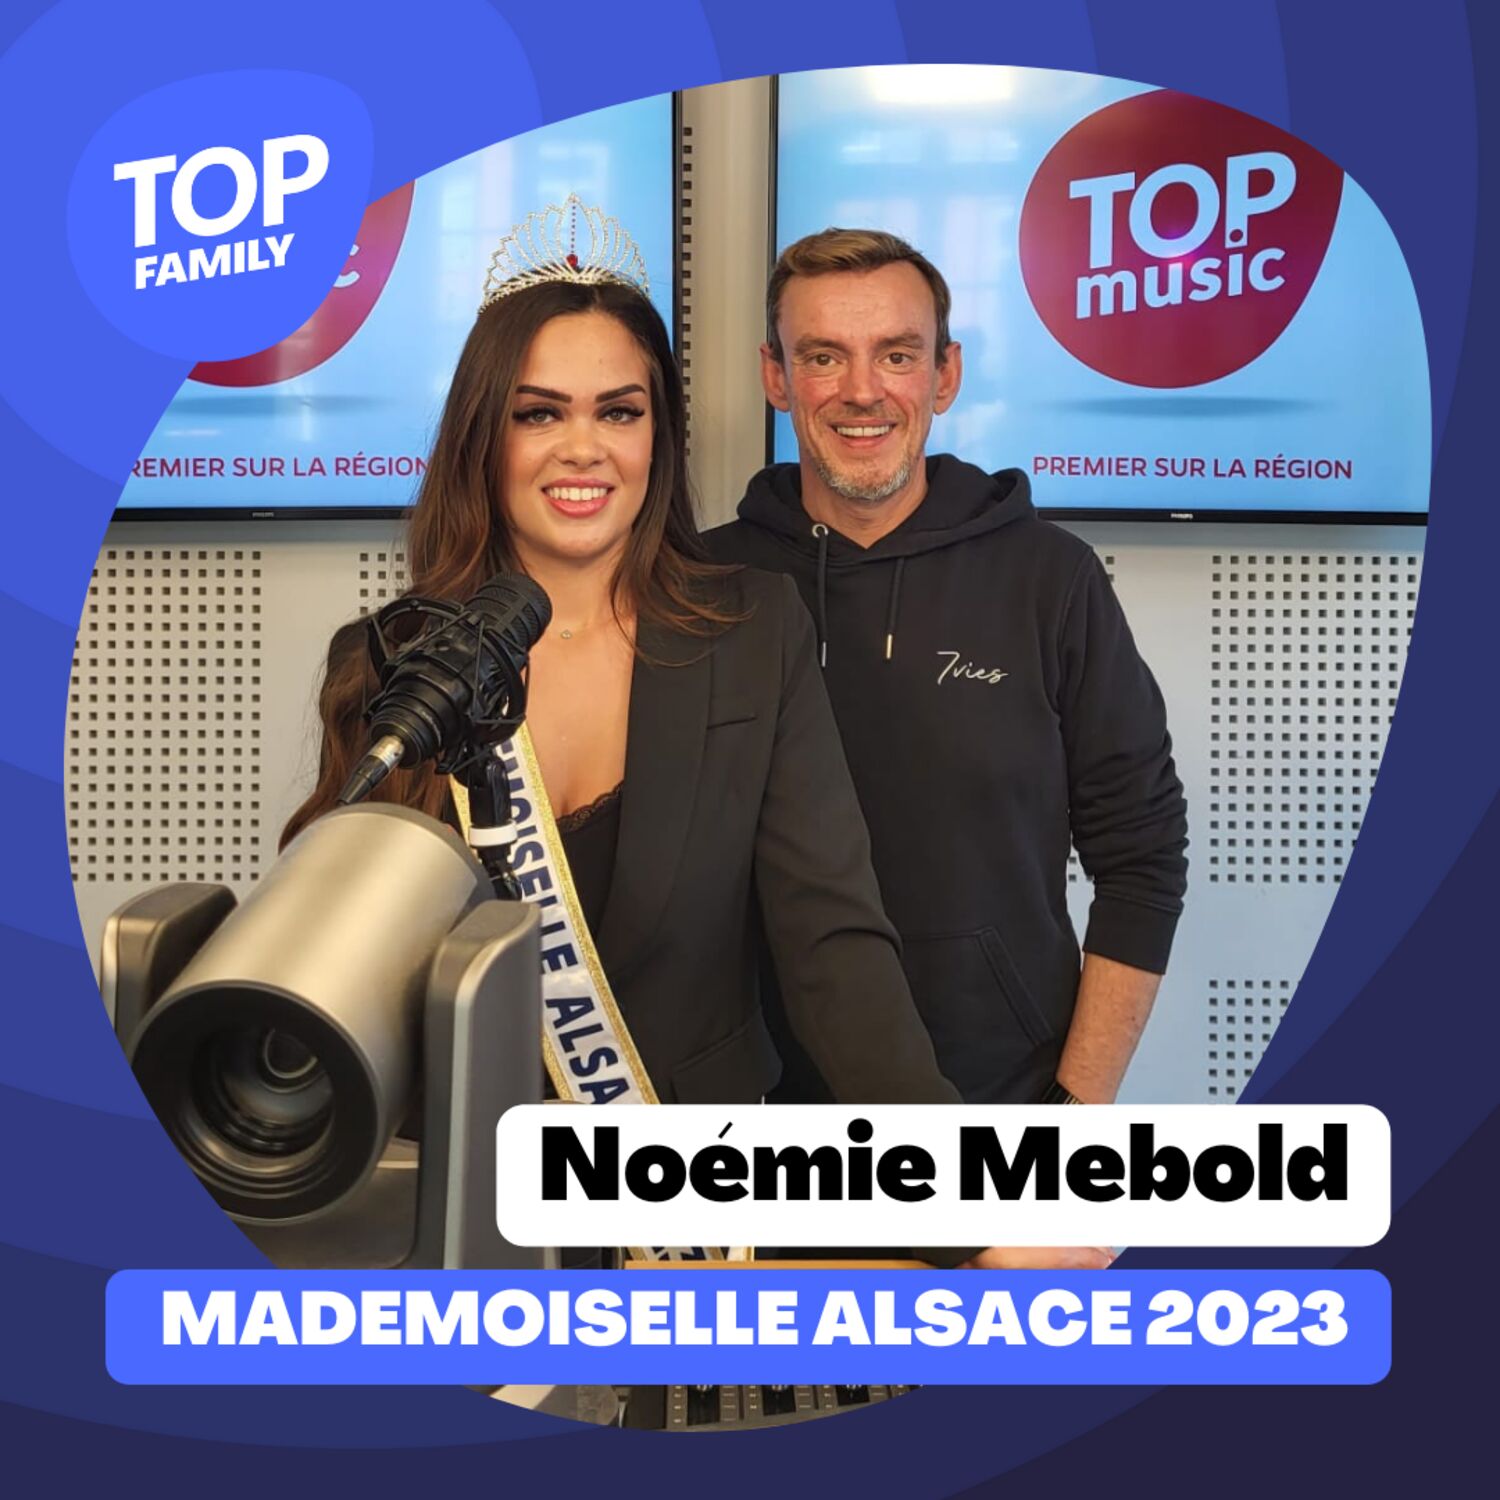 Noémie Mebold, Mademoiselle Alsace 2023